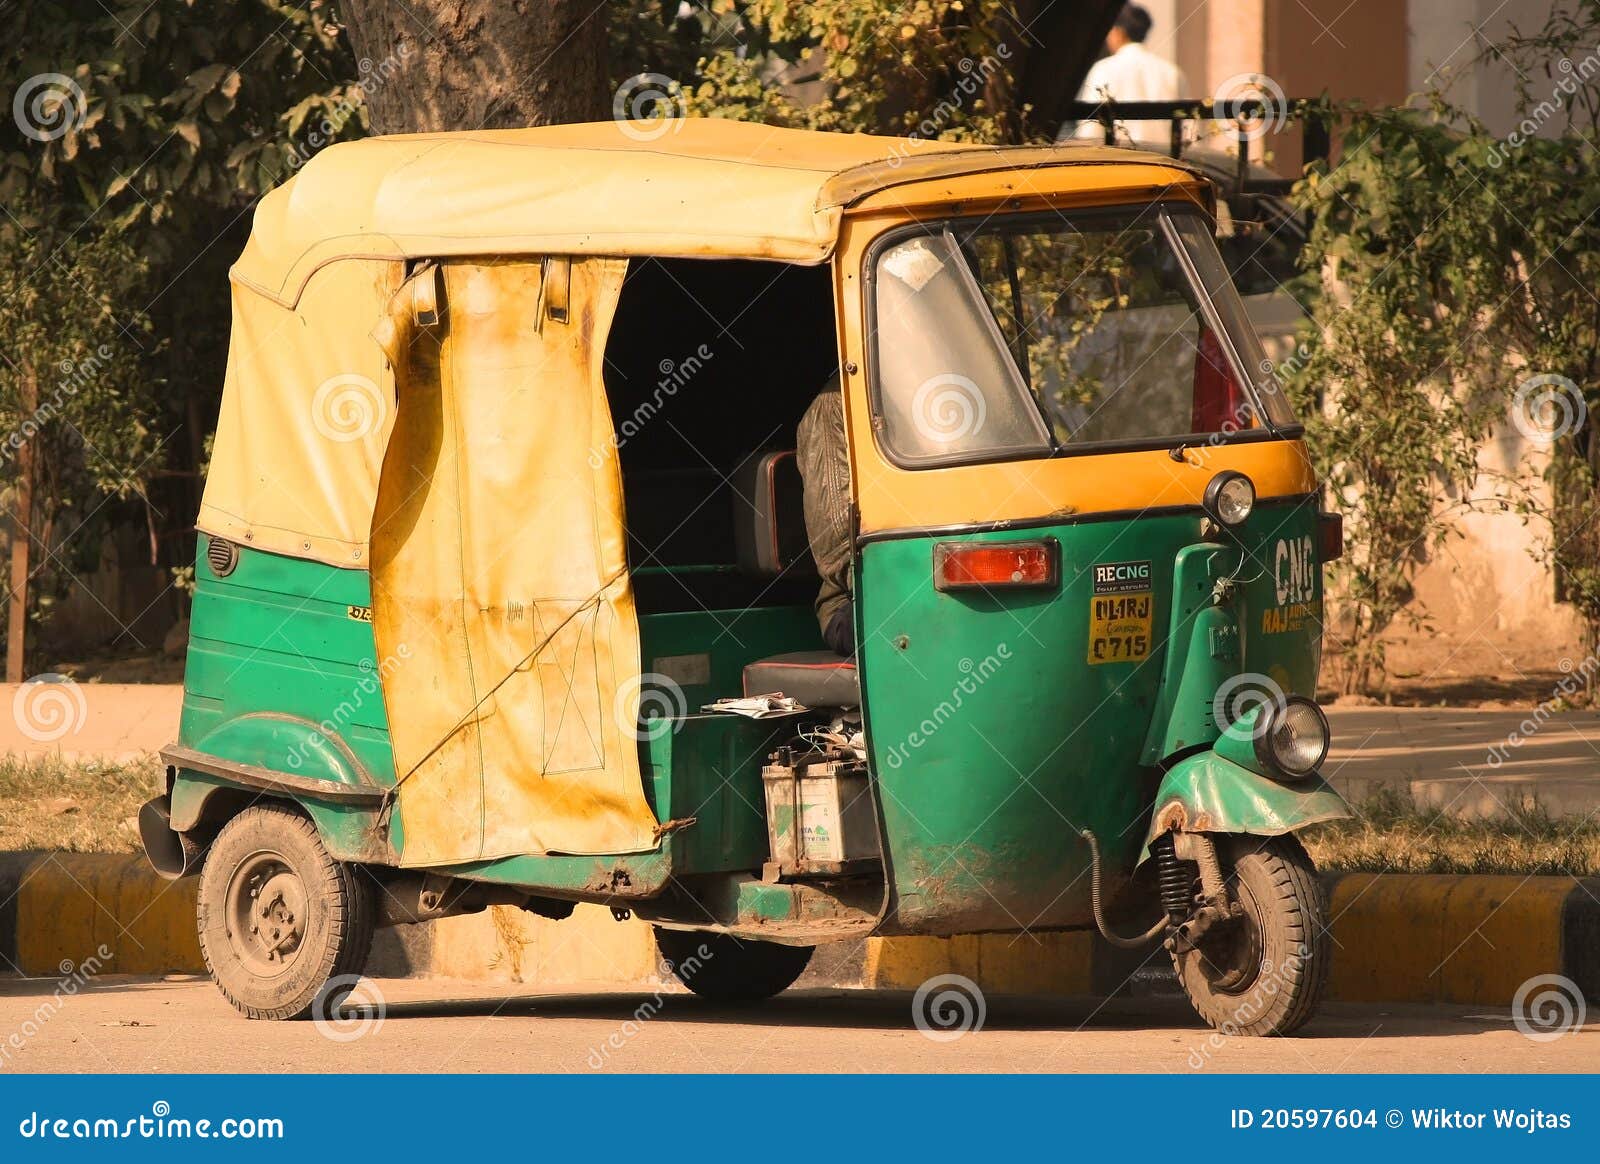 indian-taxi-20597604.jpg